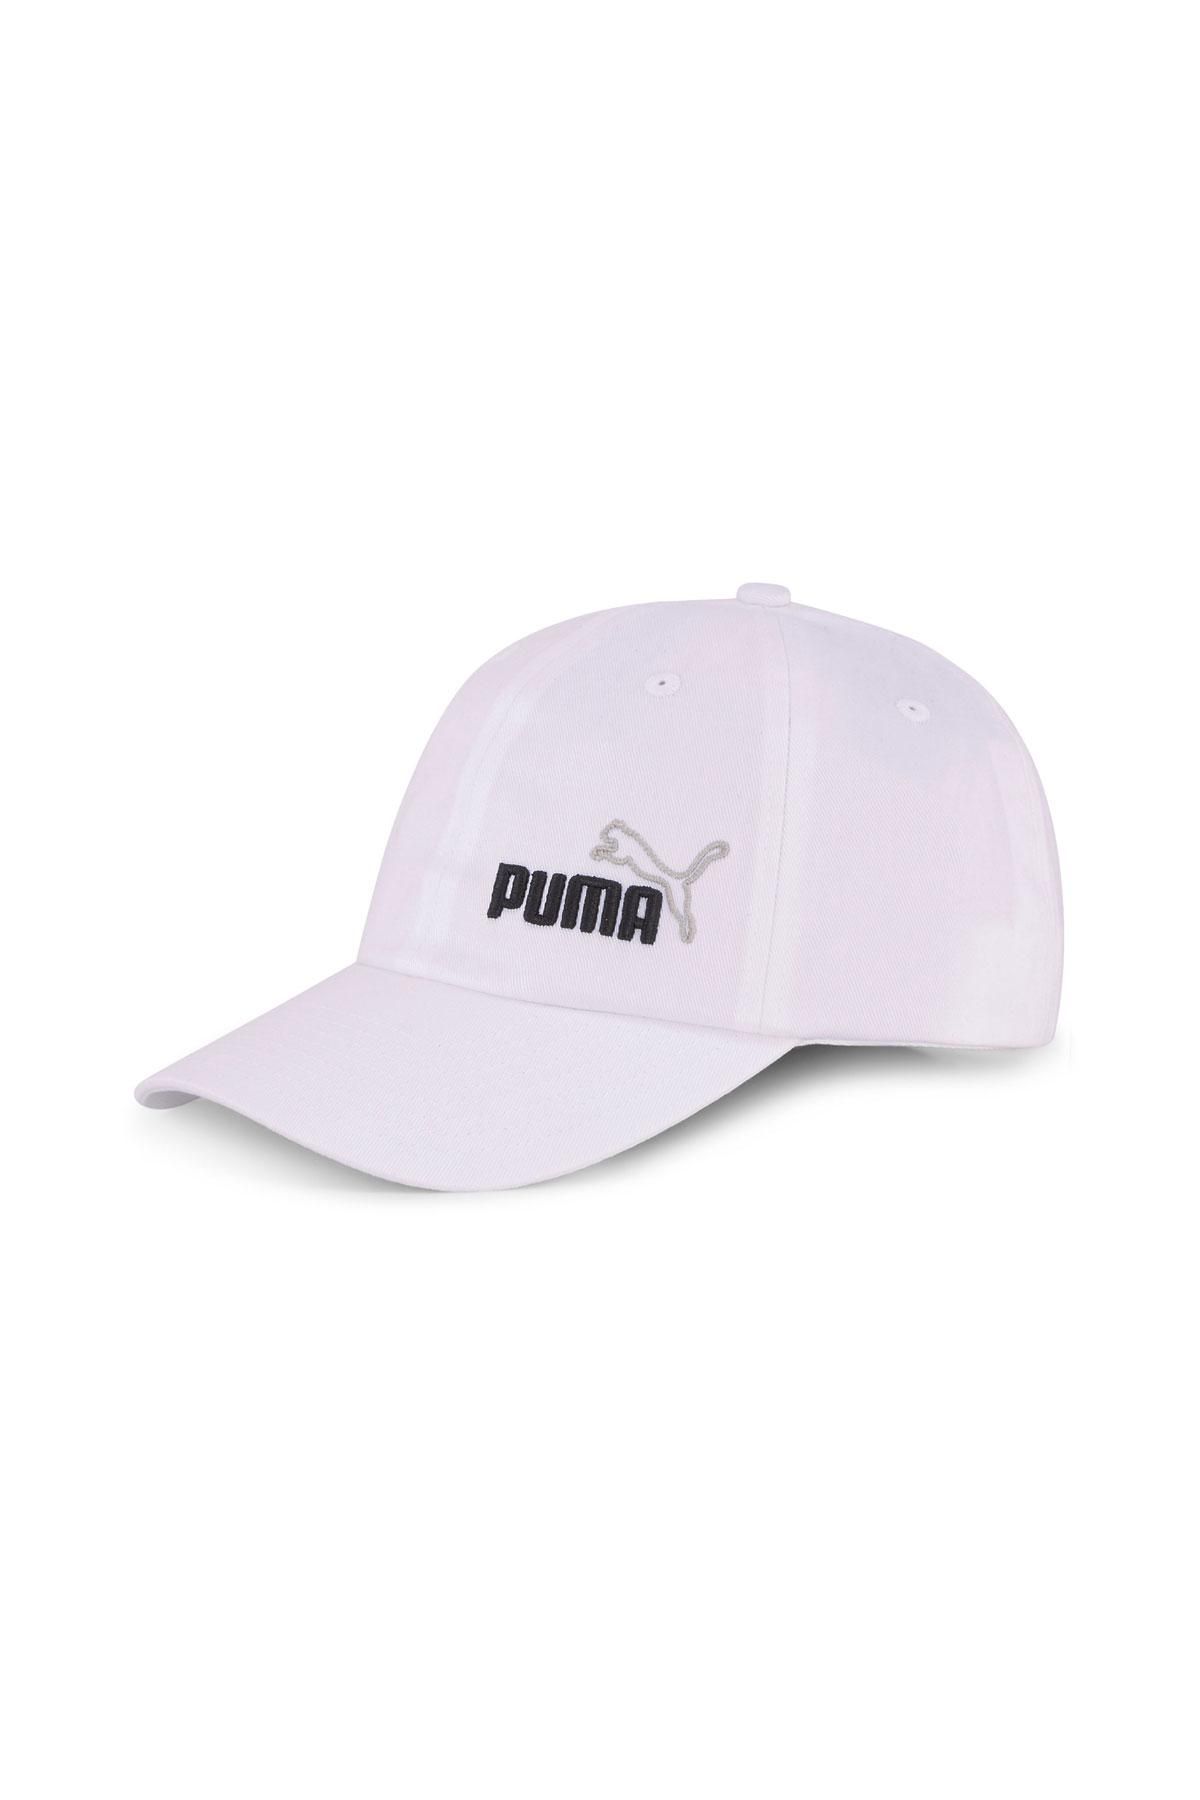 PUMA Ess 1 Puma White Cap Caps White-No Men Ii